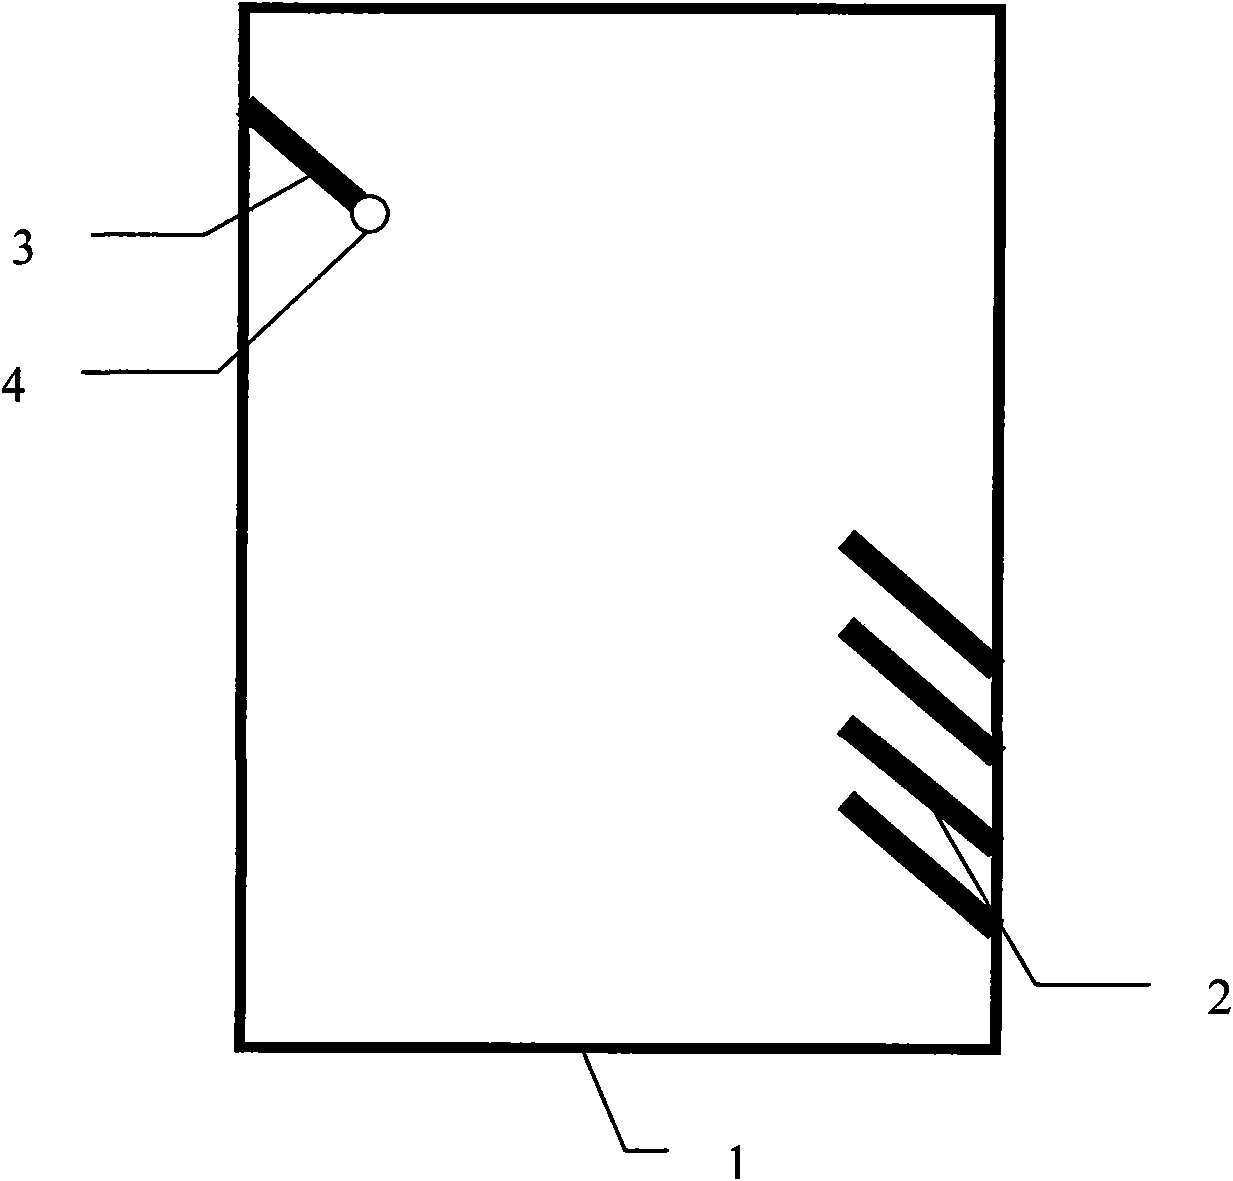 Demonstration device for generating Poggendorff illusion and demonstration method